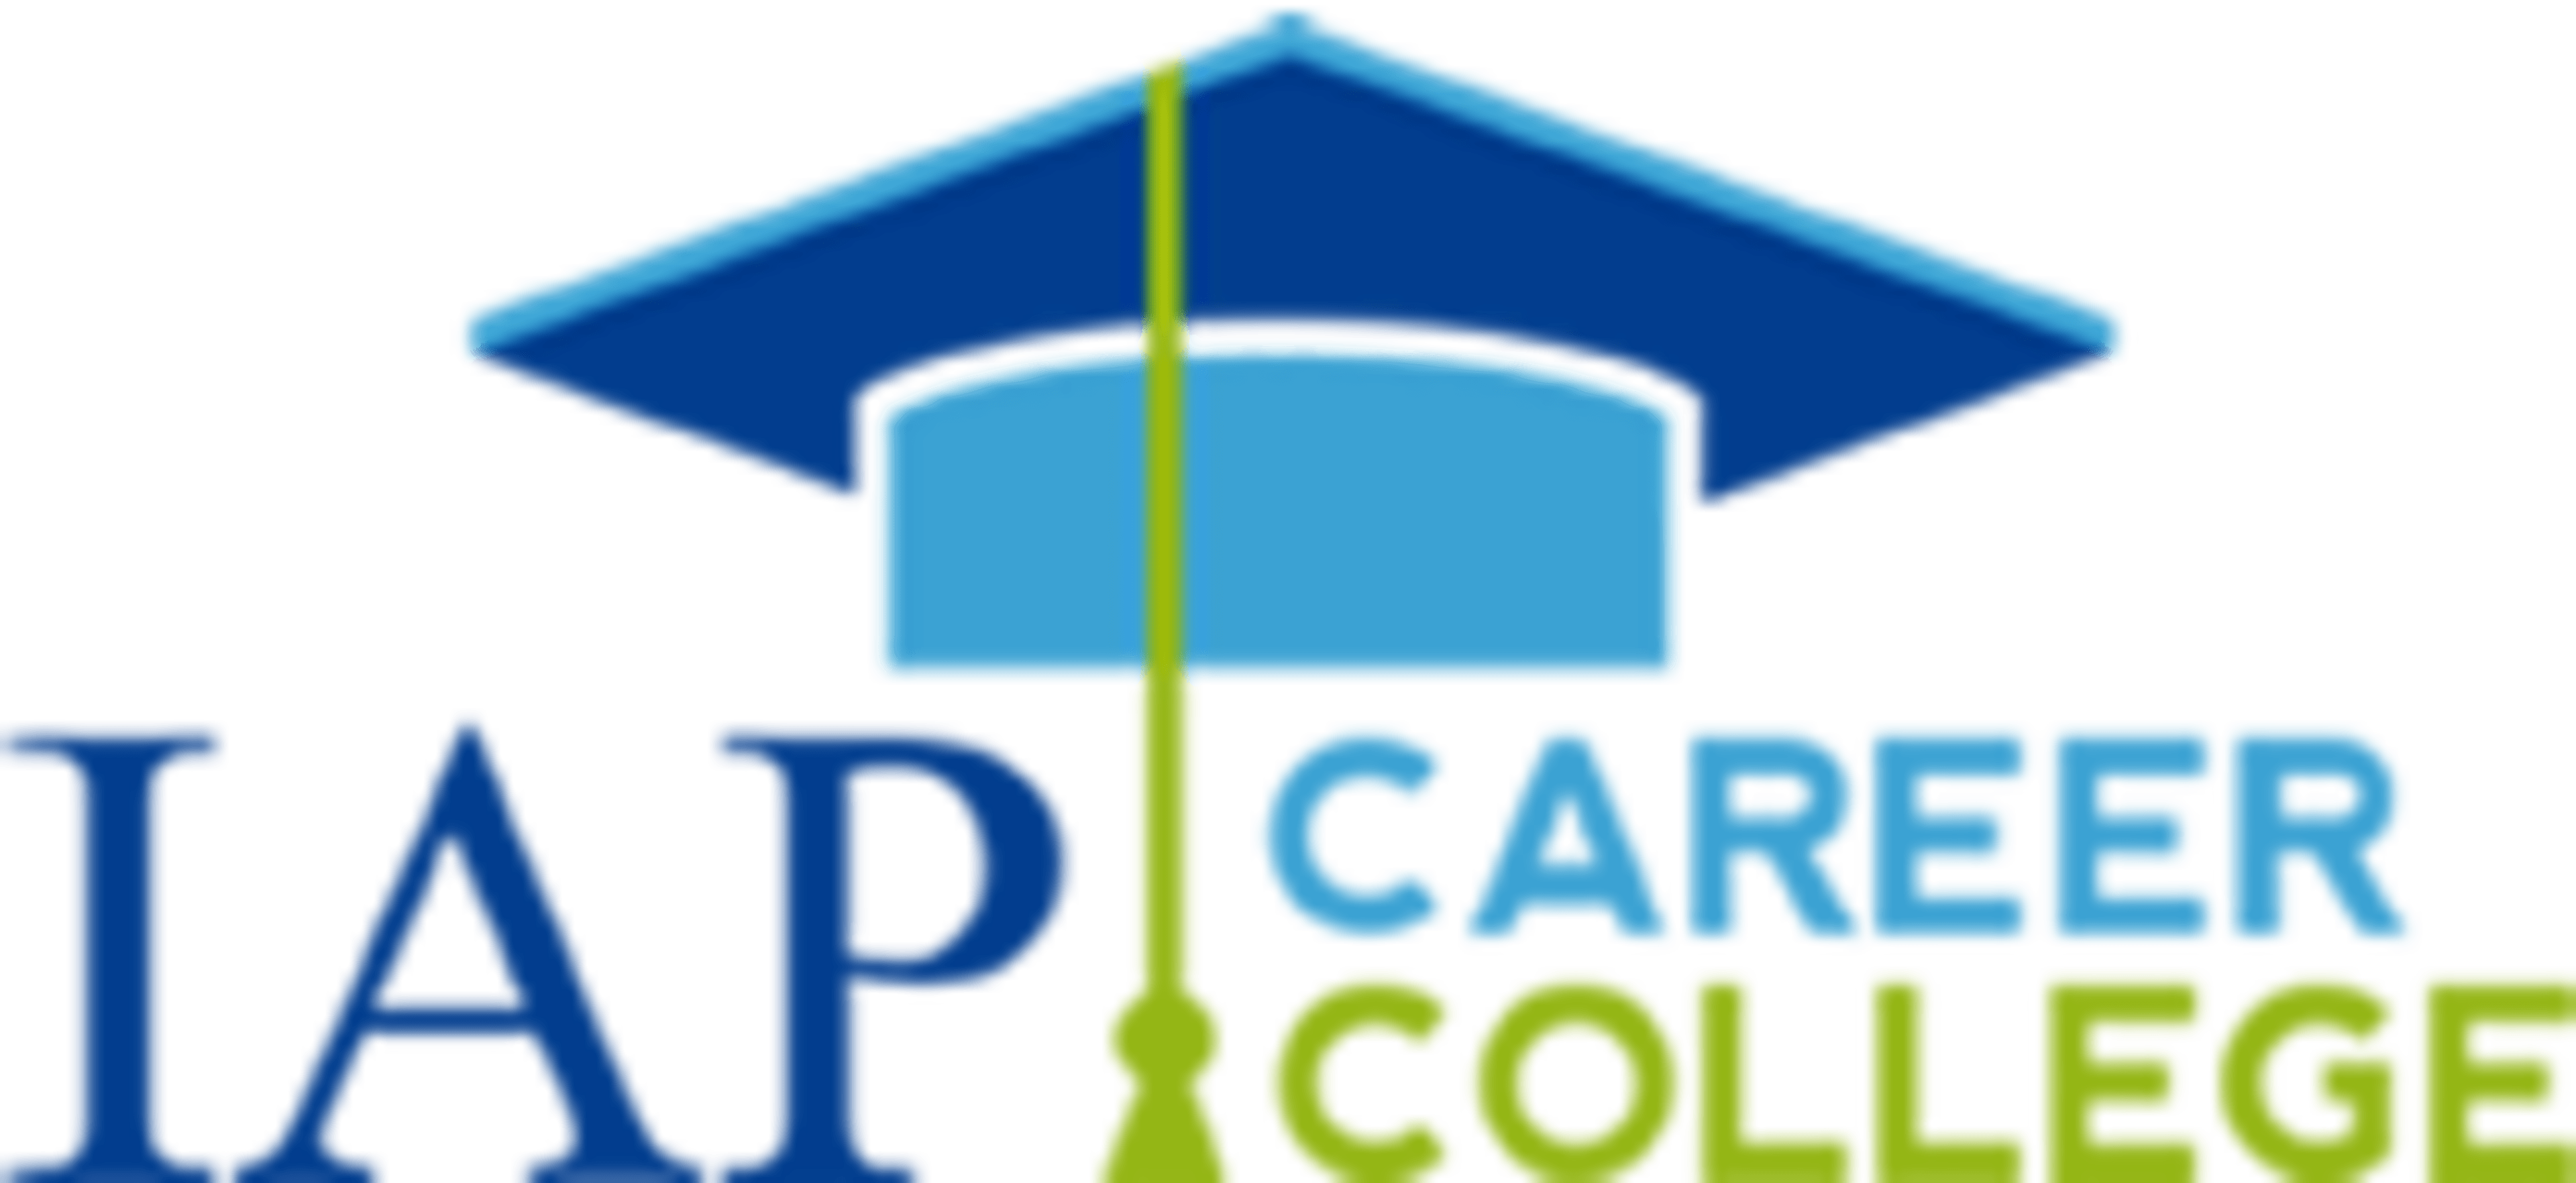 IAP Career College Code